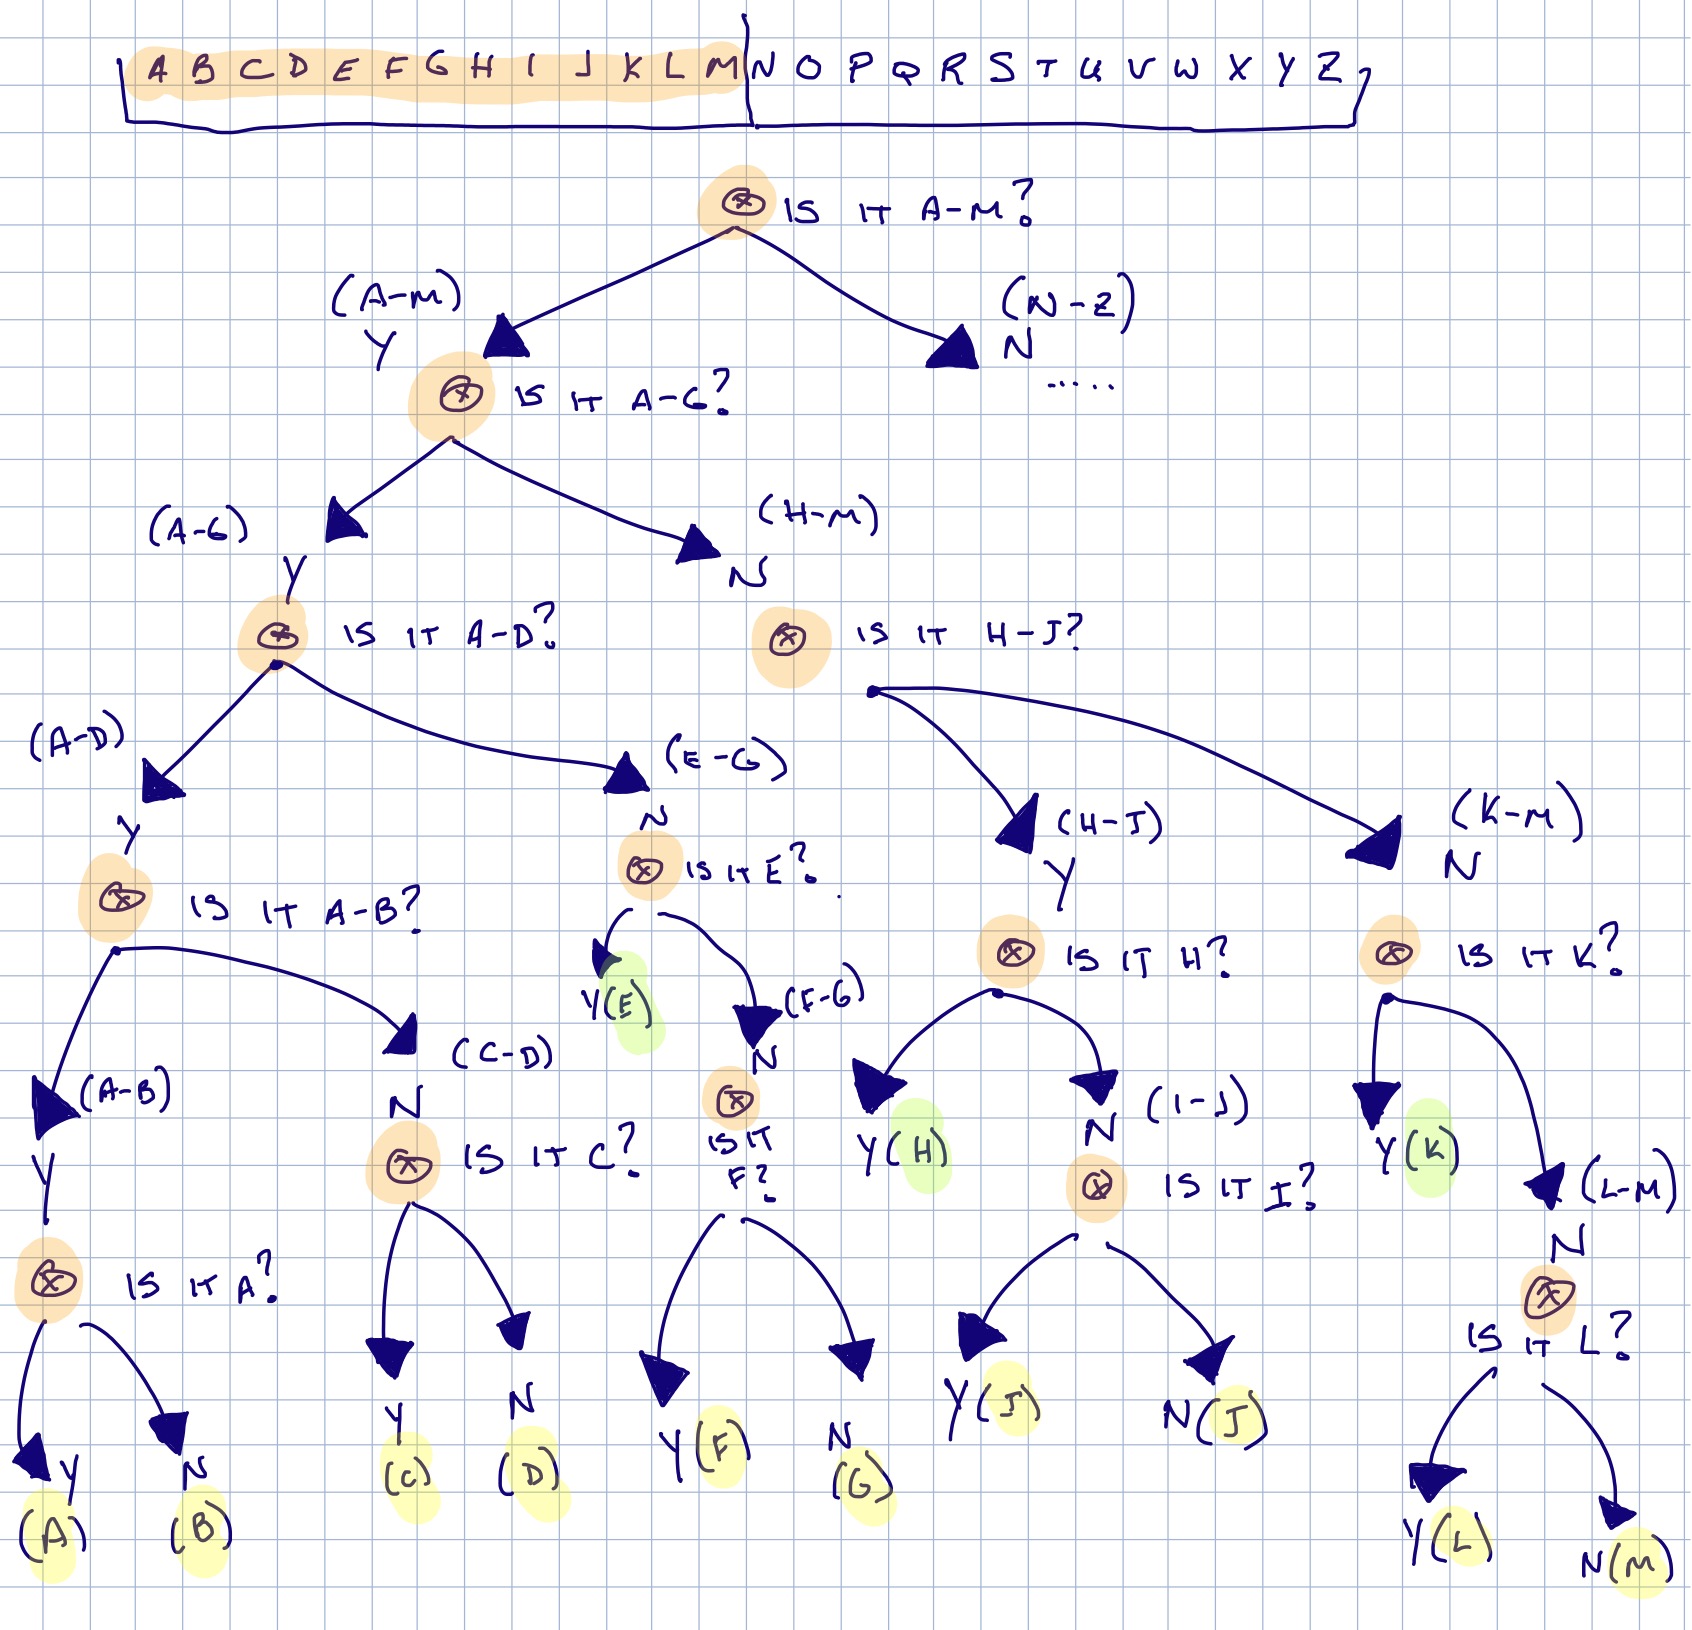 Information Entropy Decision Tree